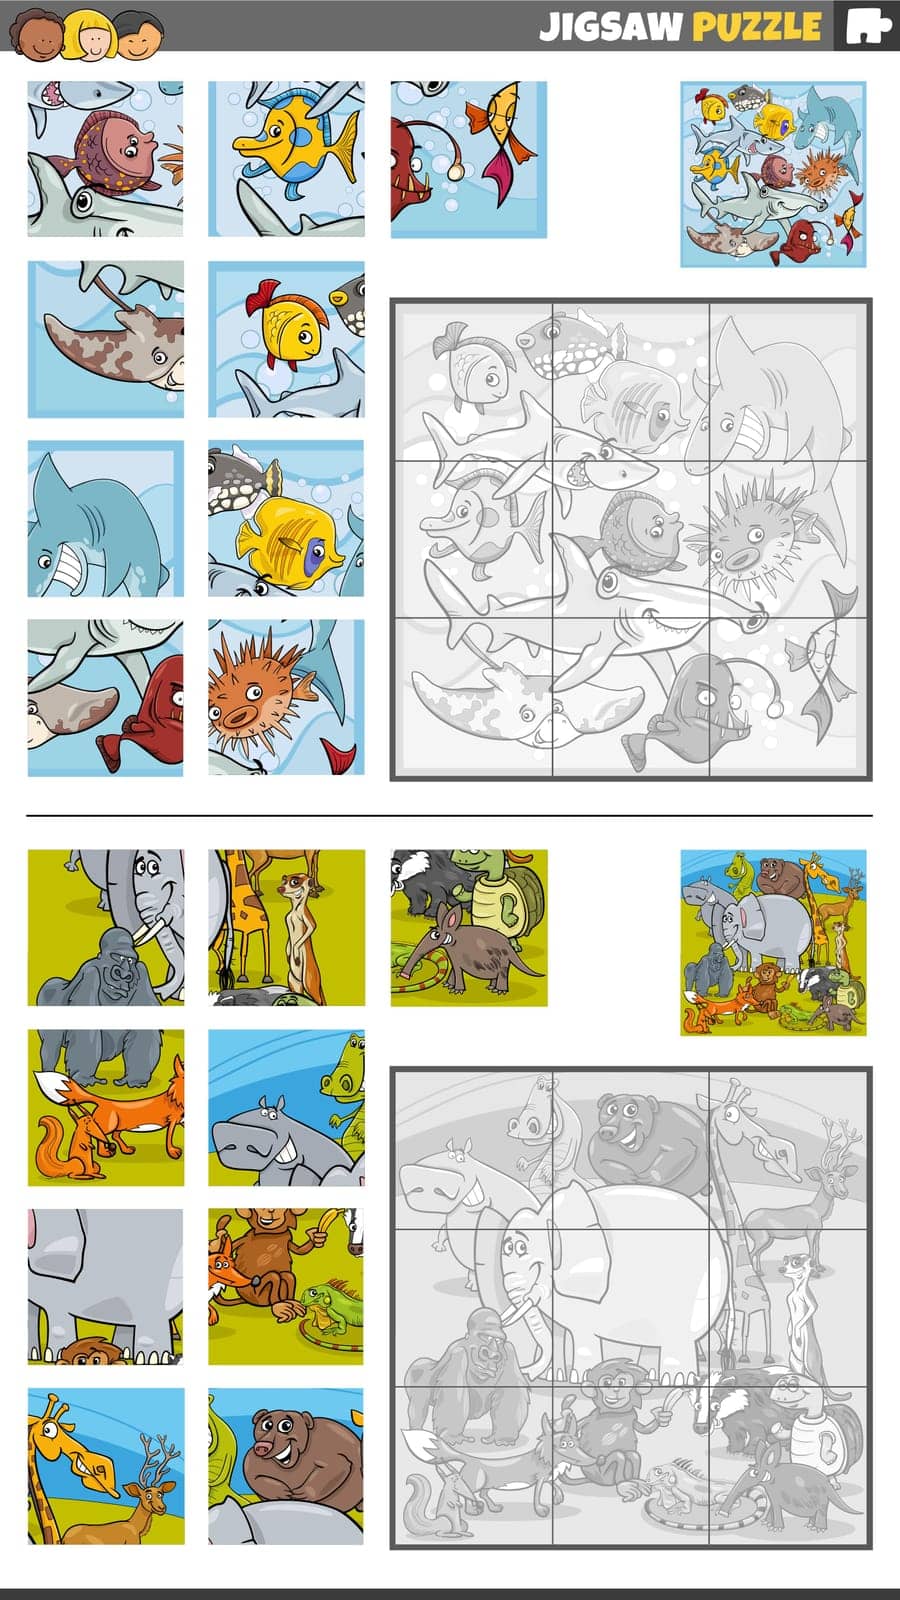 jigsaw puzzle activities set with cartoon animal characters by izakowski